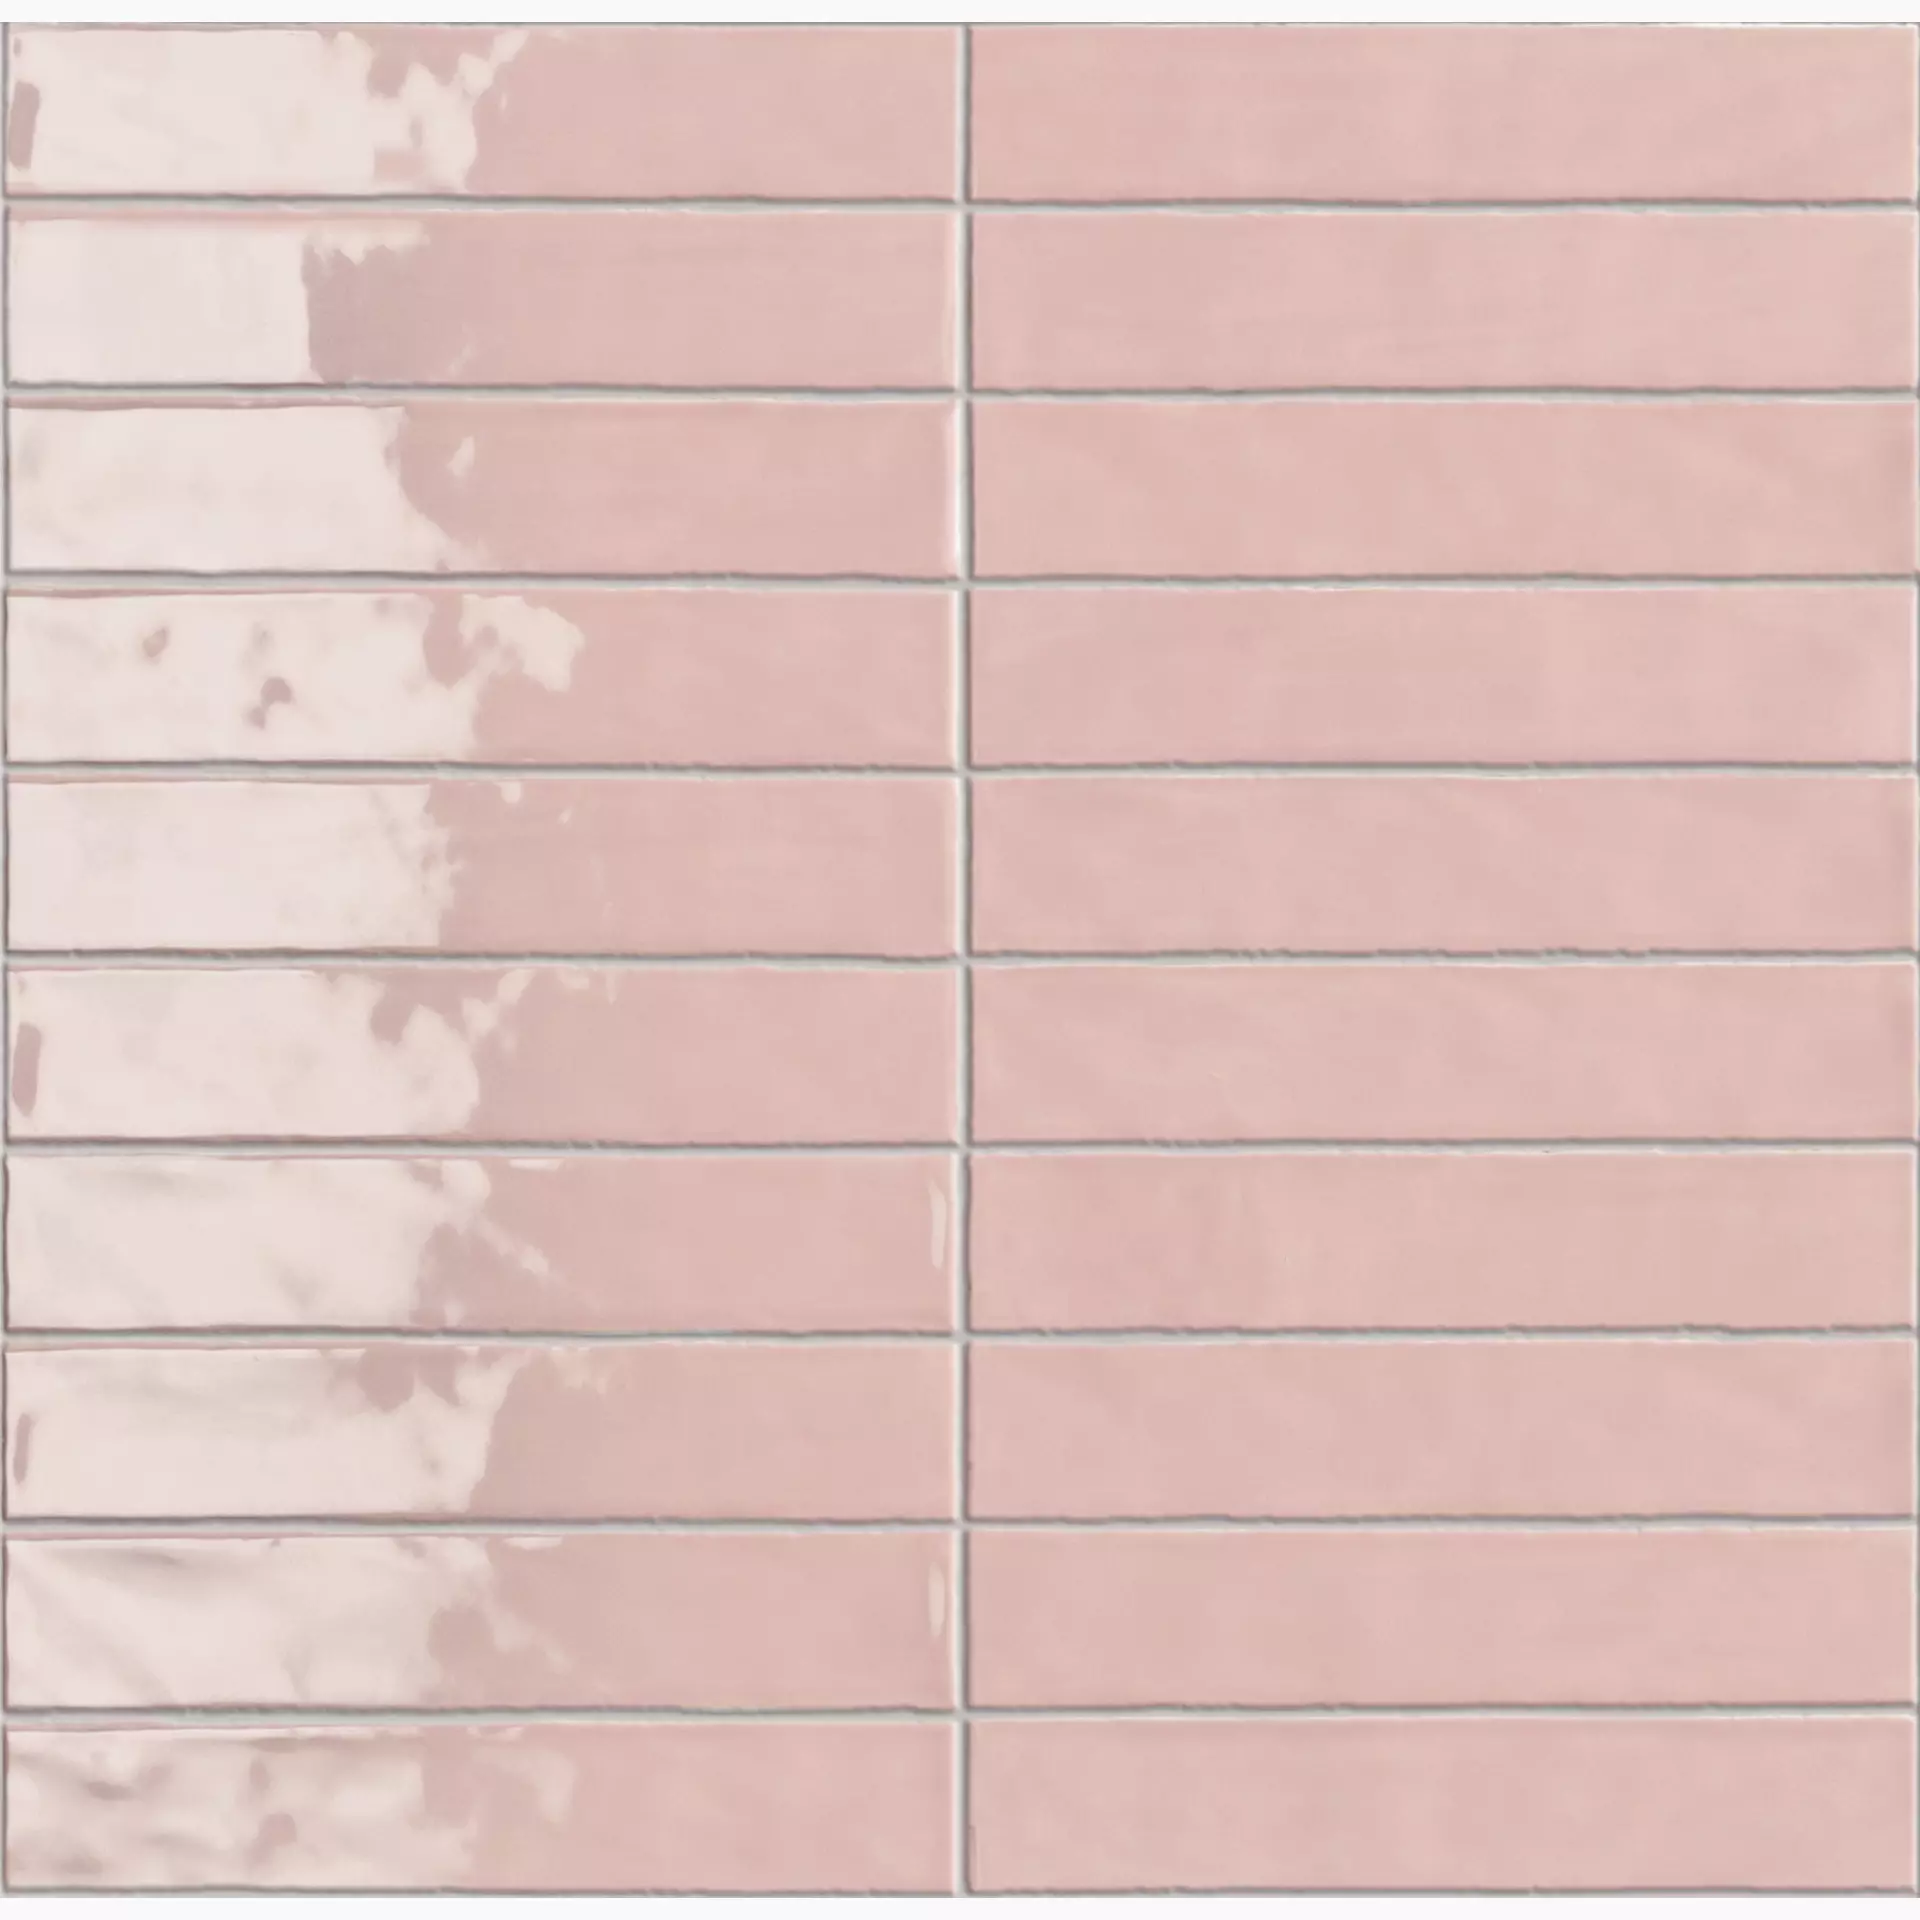 Sartoria Vernici Baby Pink Glossy SAVE1252G 5x25cm 10mm